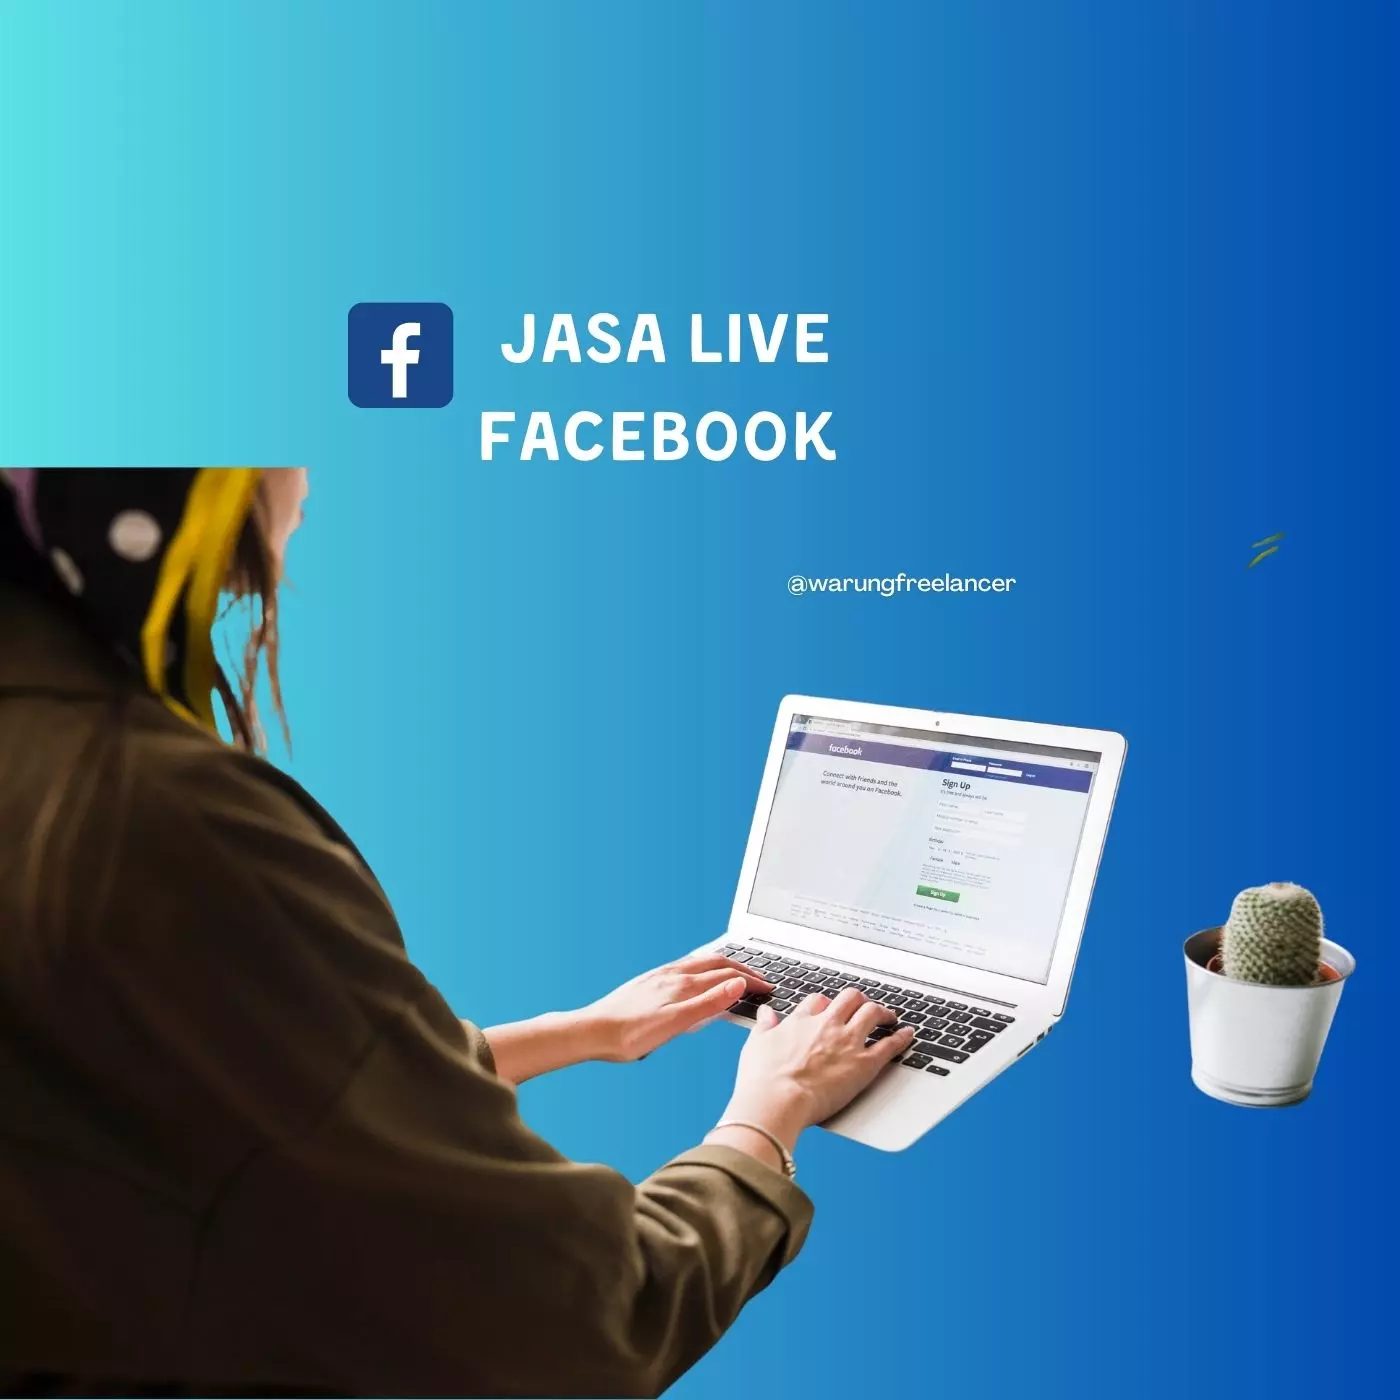 Jasa Live Facebook